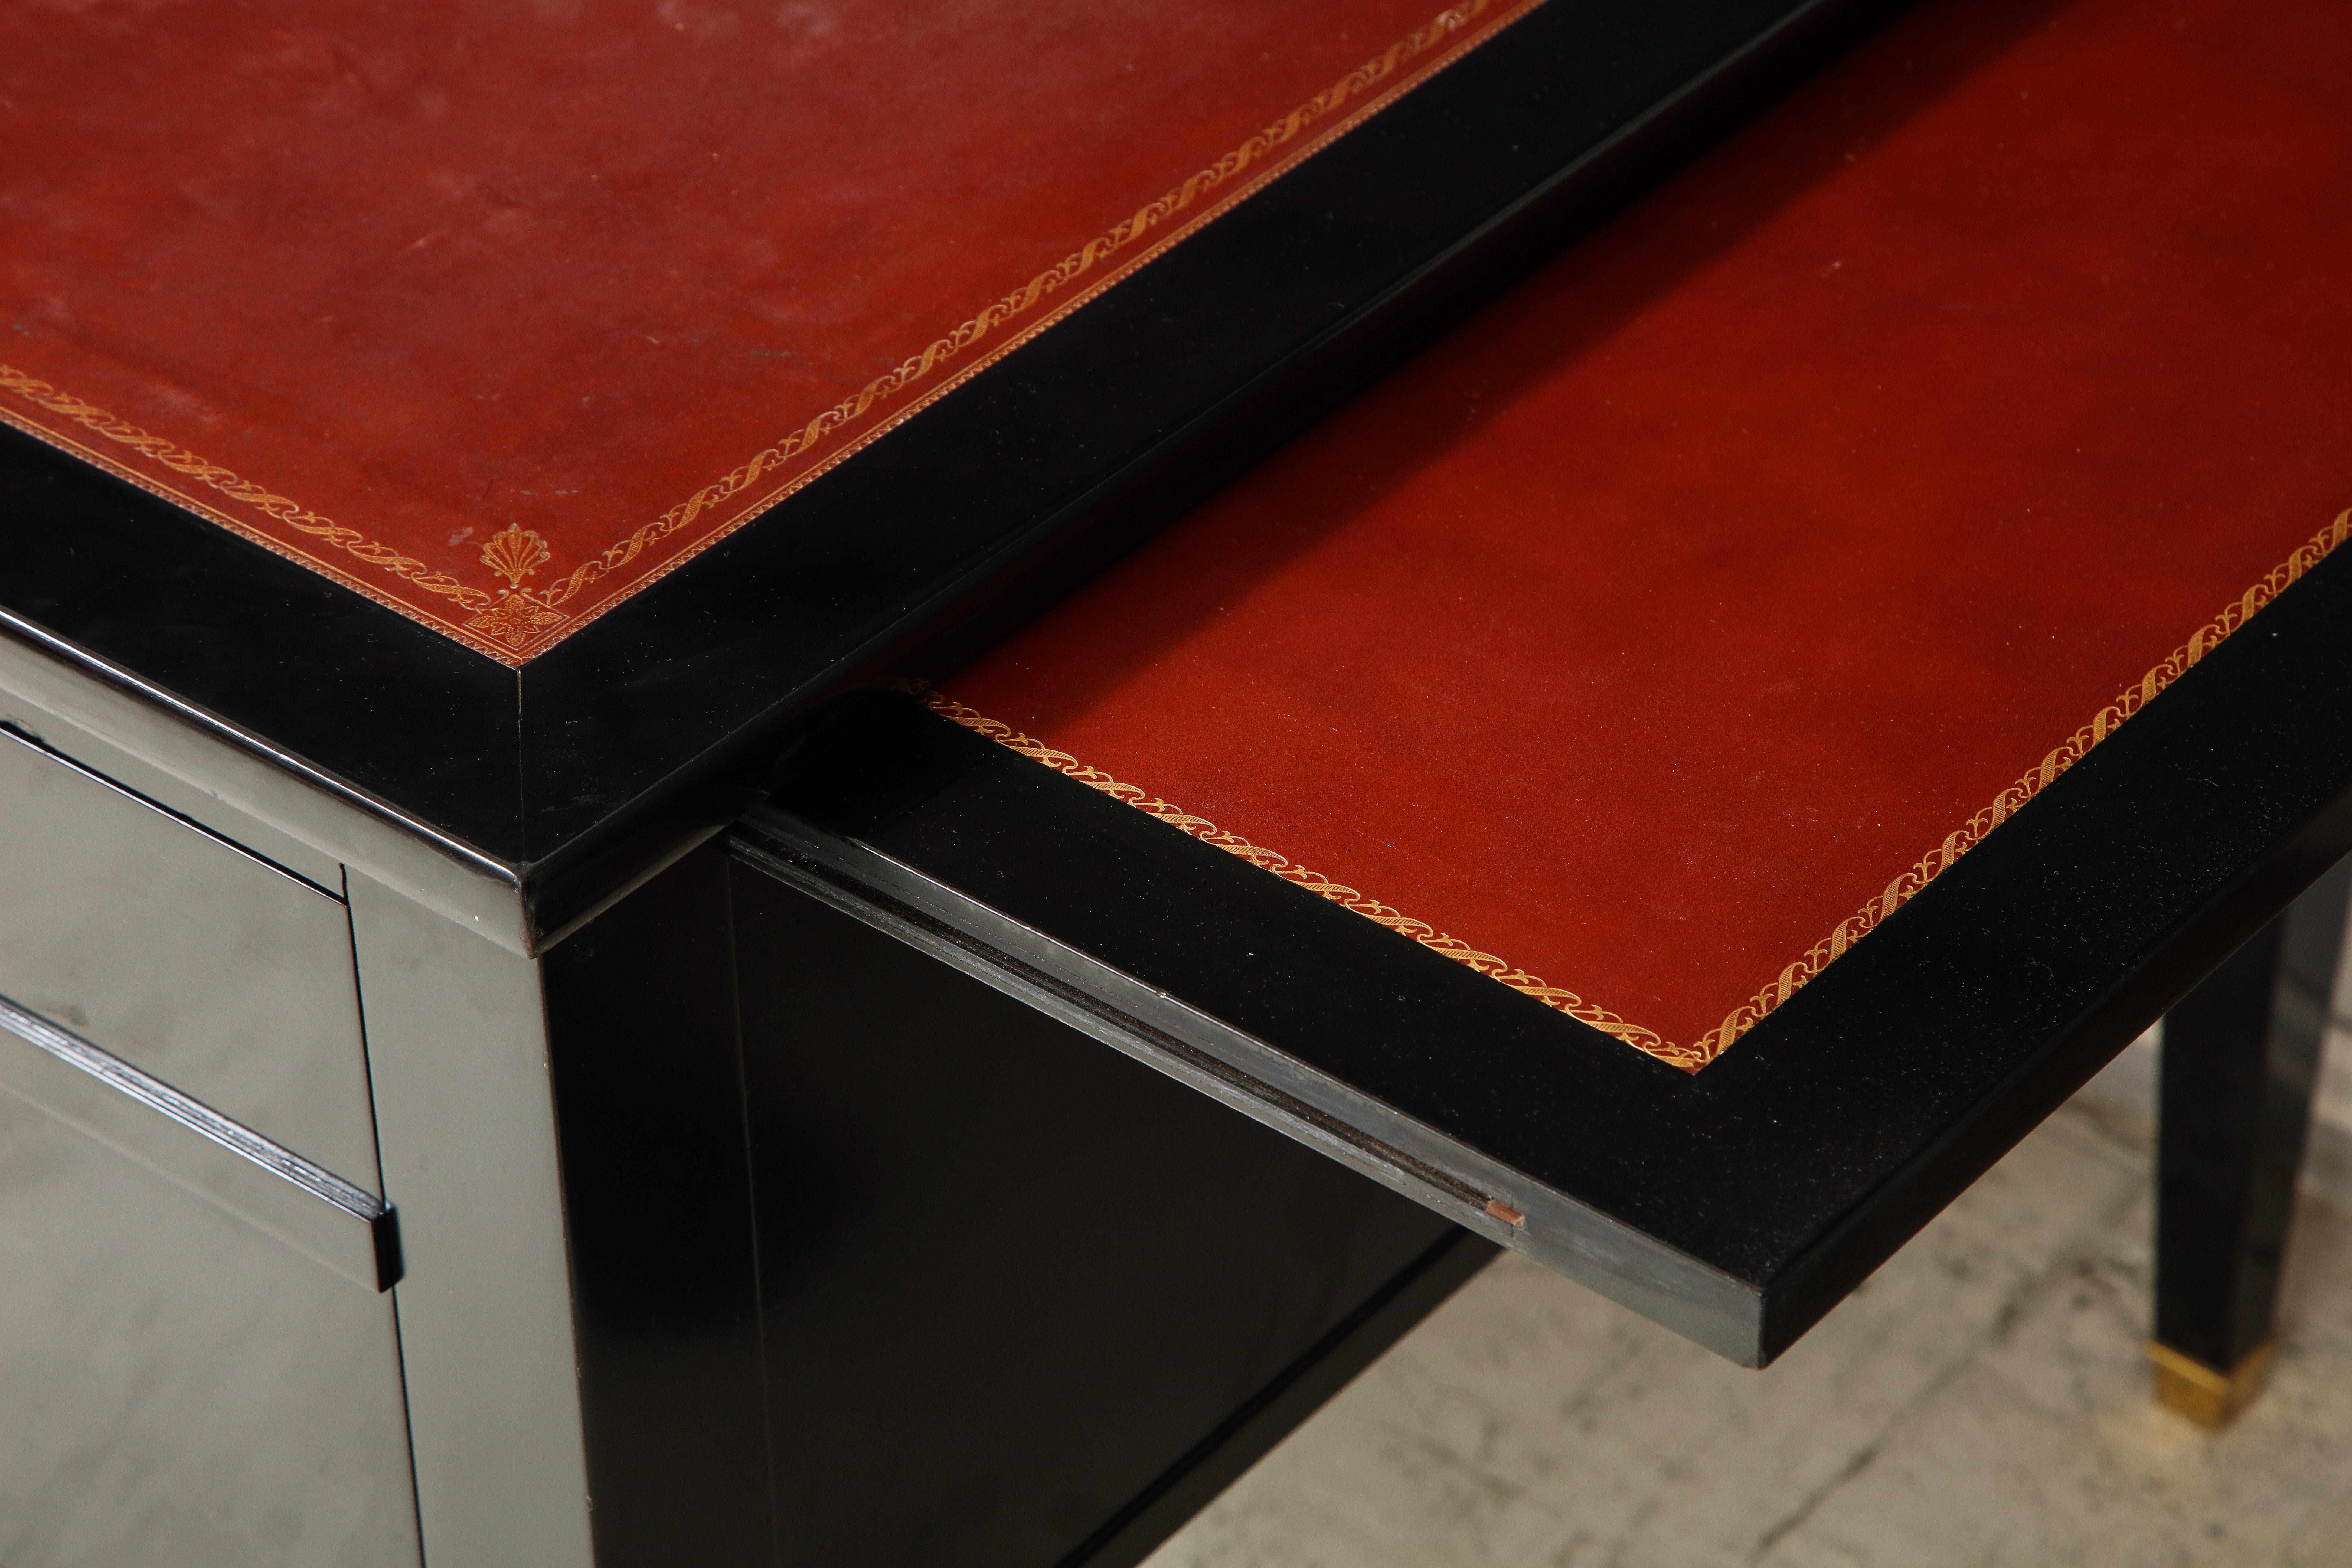 20th Century French Directoire Style Ebonized Bureau Plat Desk with Leather Top